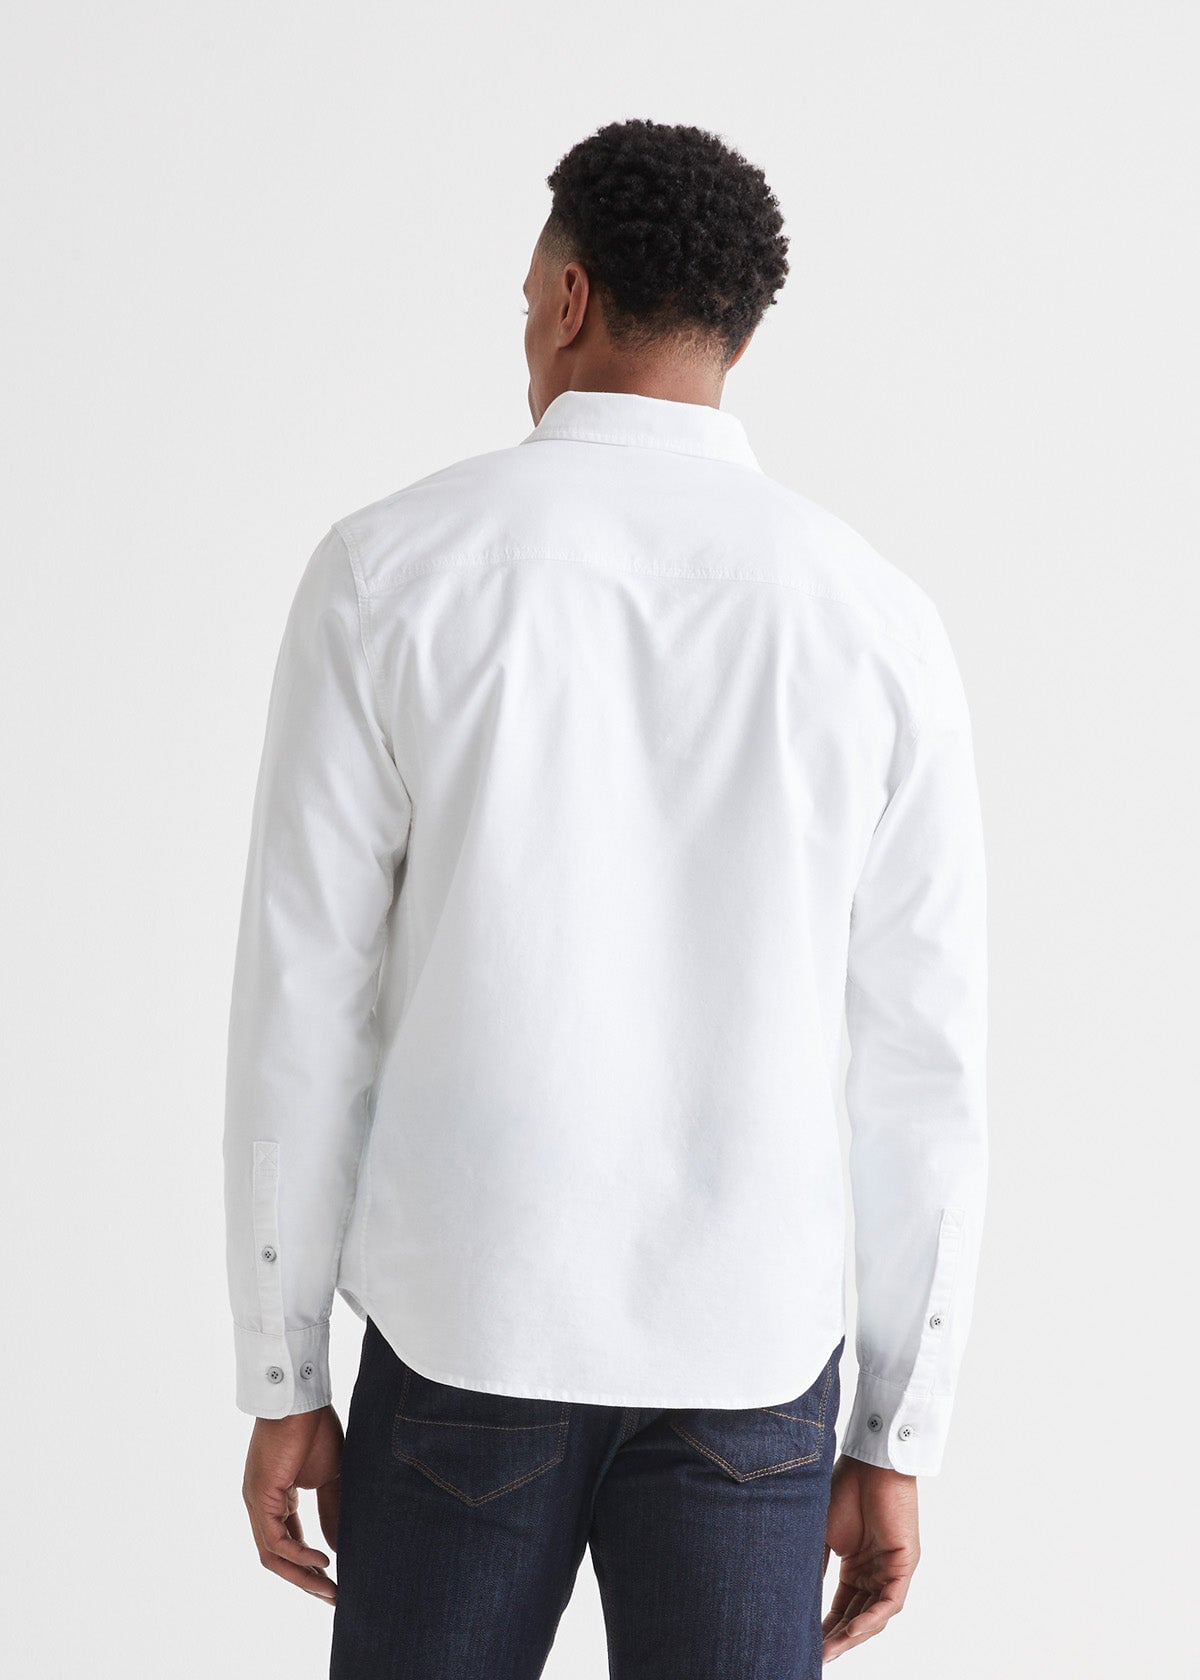 mens white stretch button down shirt back